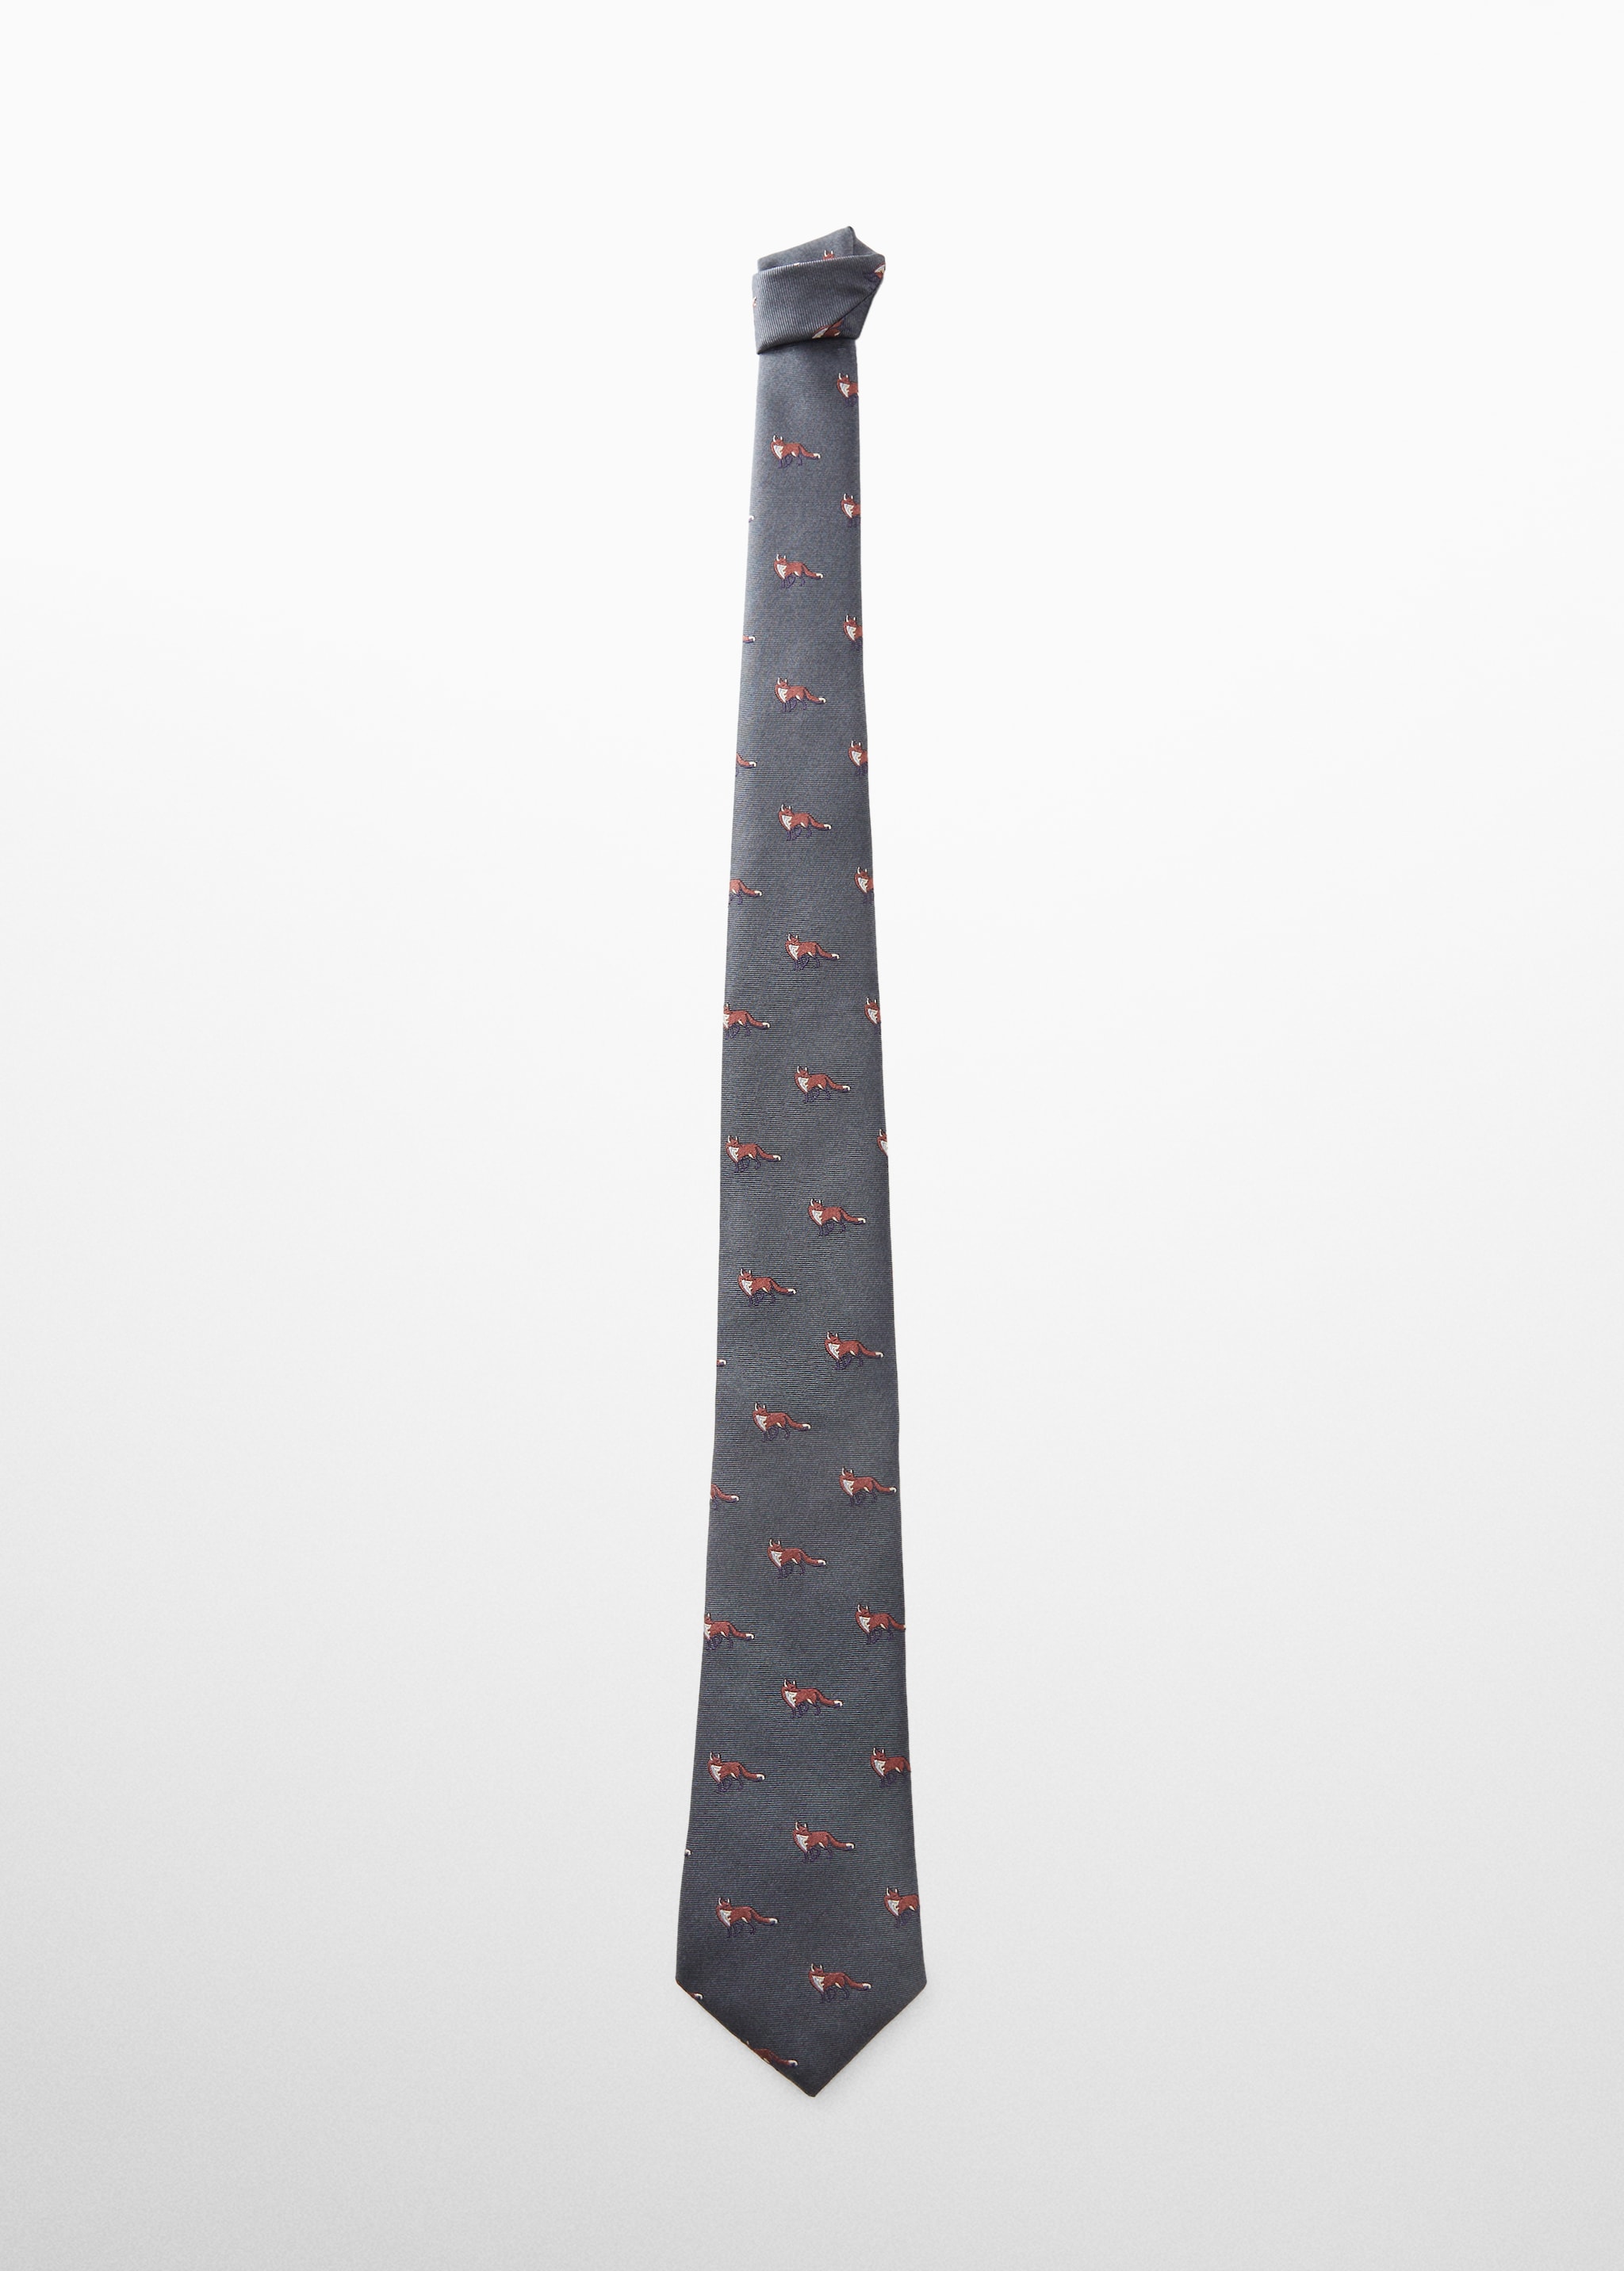 Hayvan desenli kravat - Modelsiz ürün